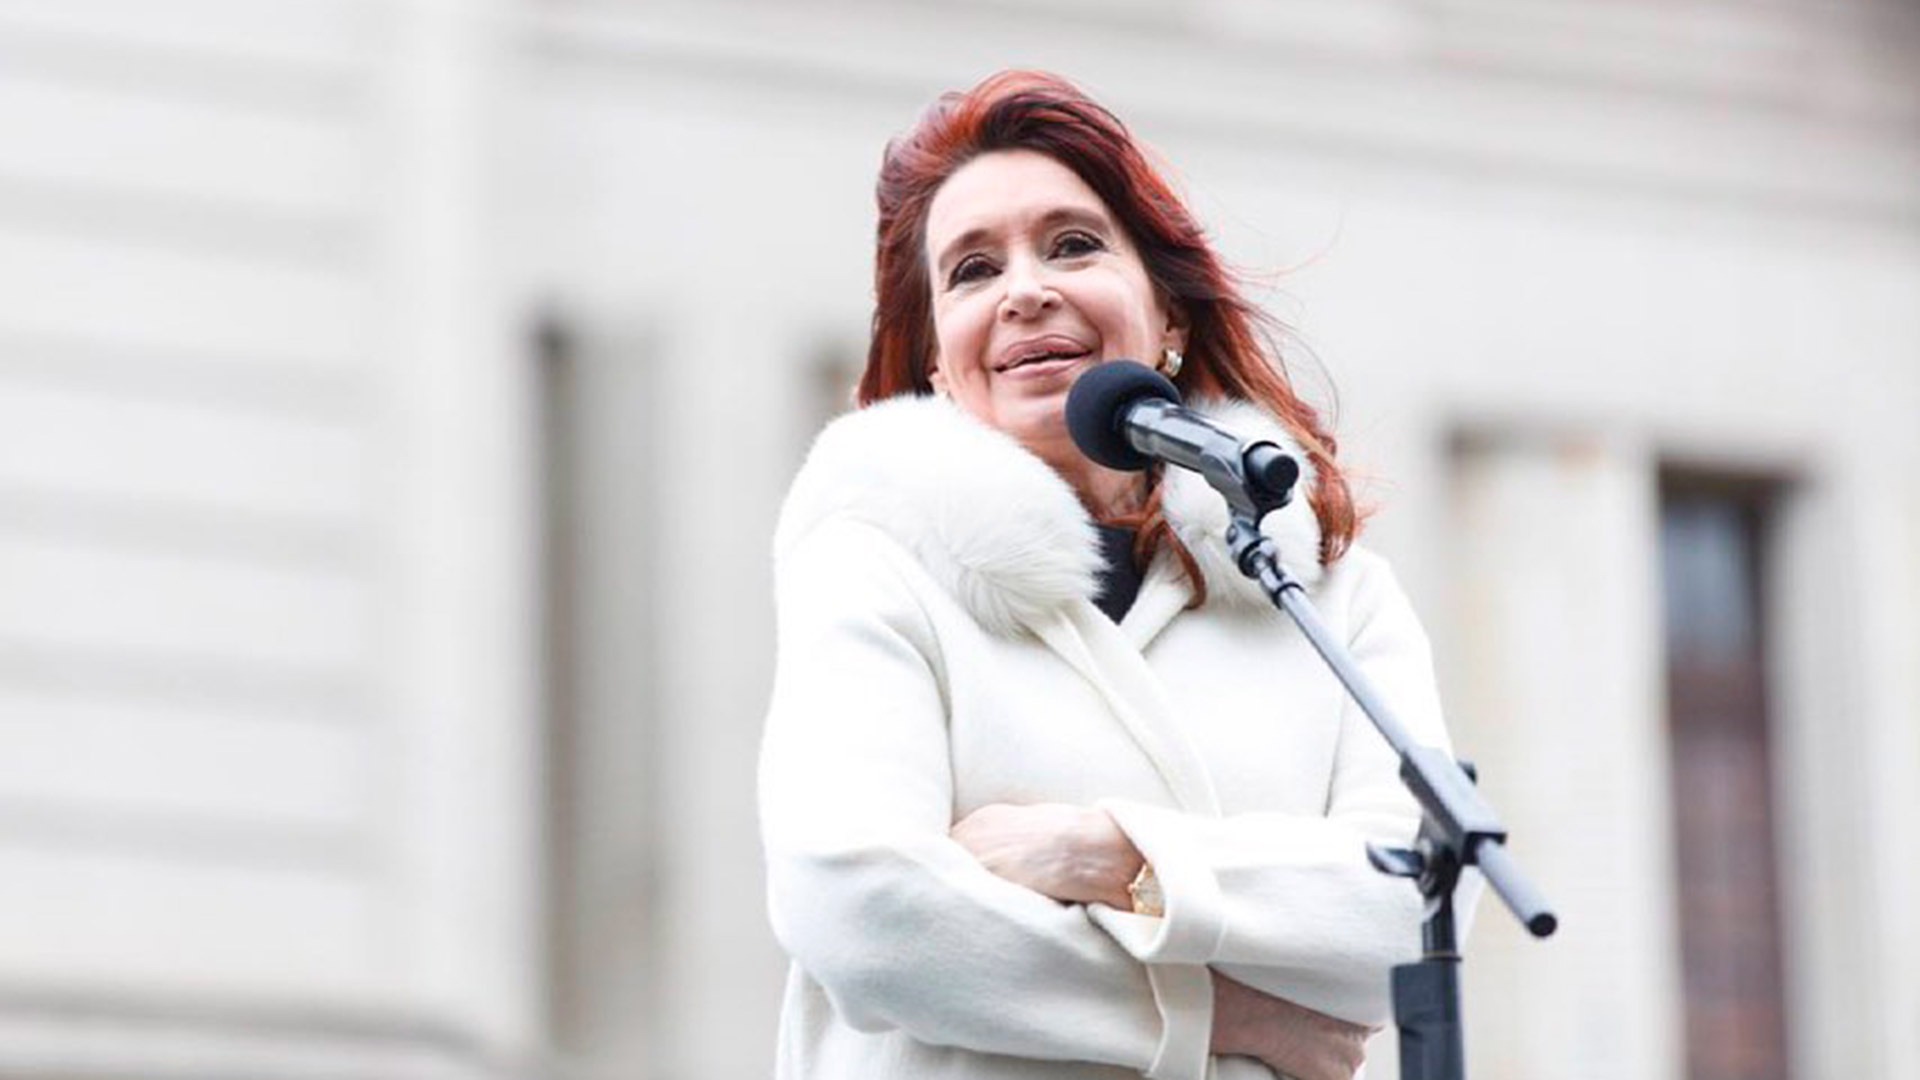 Cristina Kirchner, en el acto de La Plata en el que volvió a proponer la reforma del sistema de salud